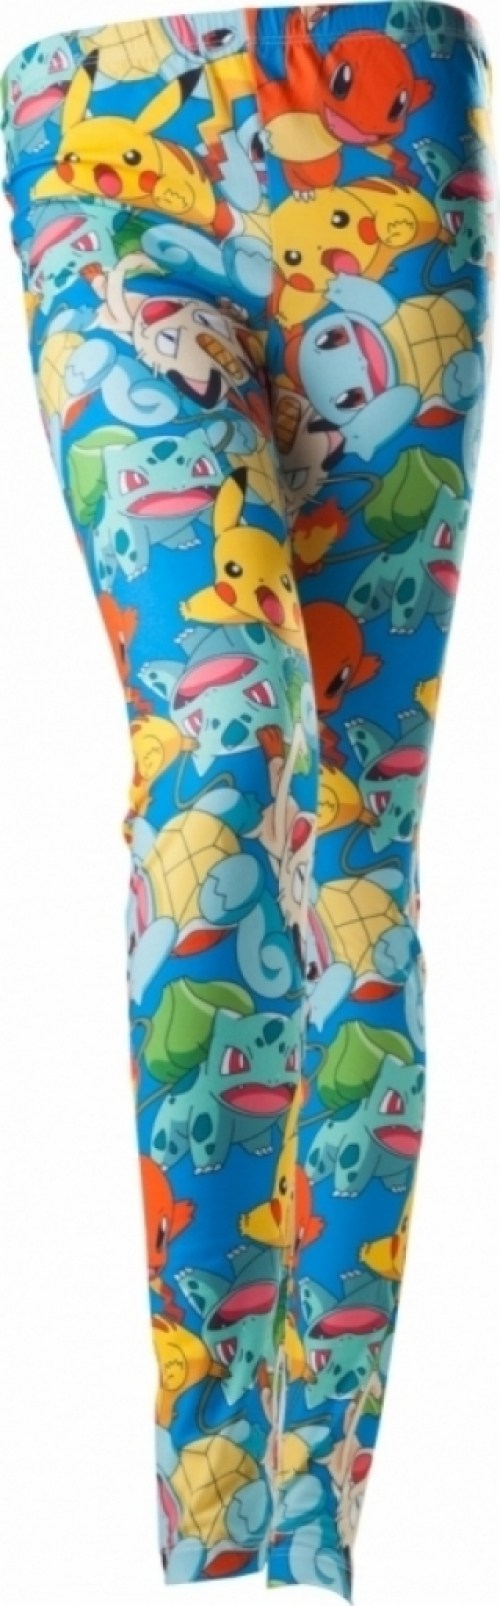 Difuzed Pokémon - All Over printed fighting Pokémon Legging